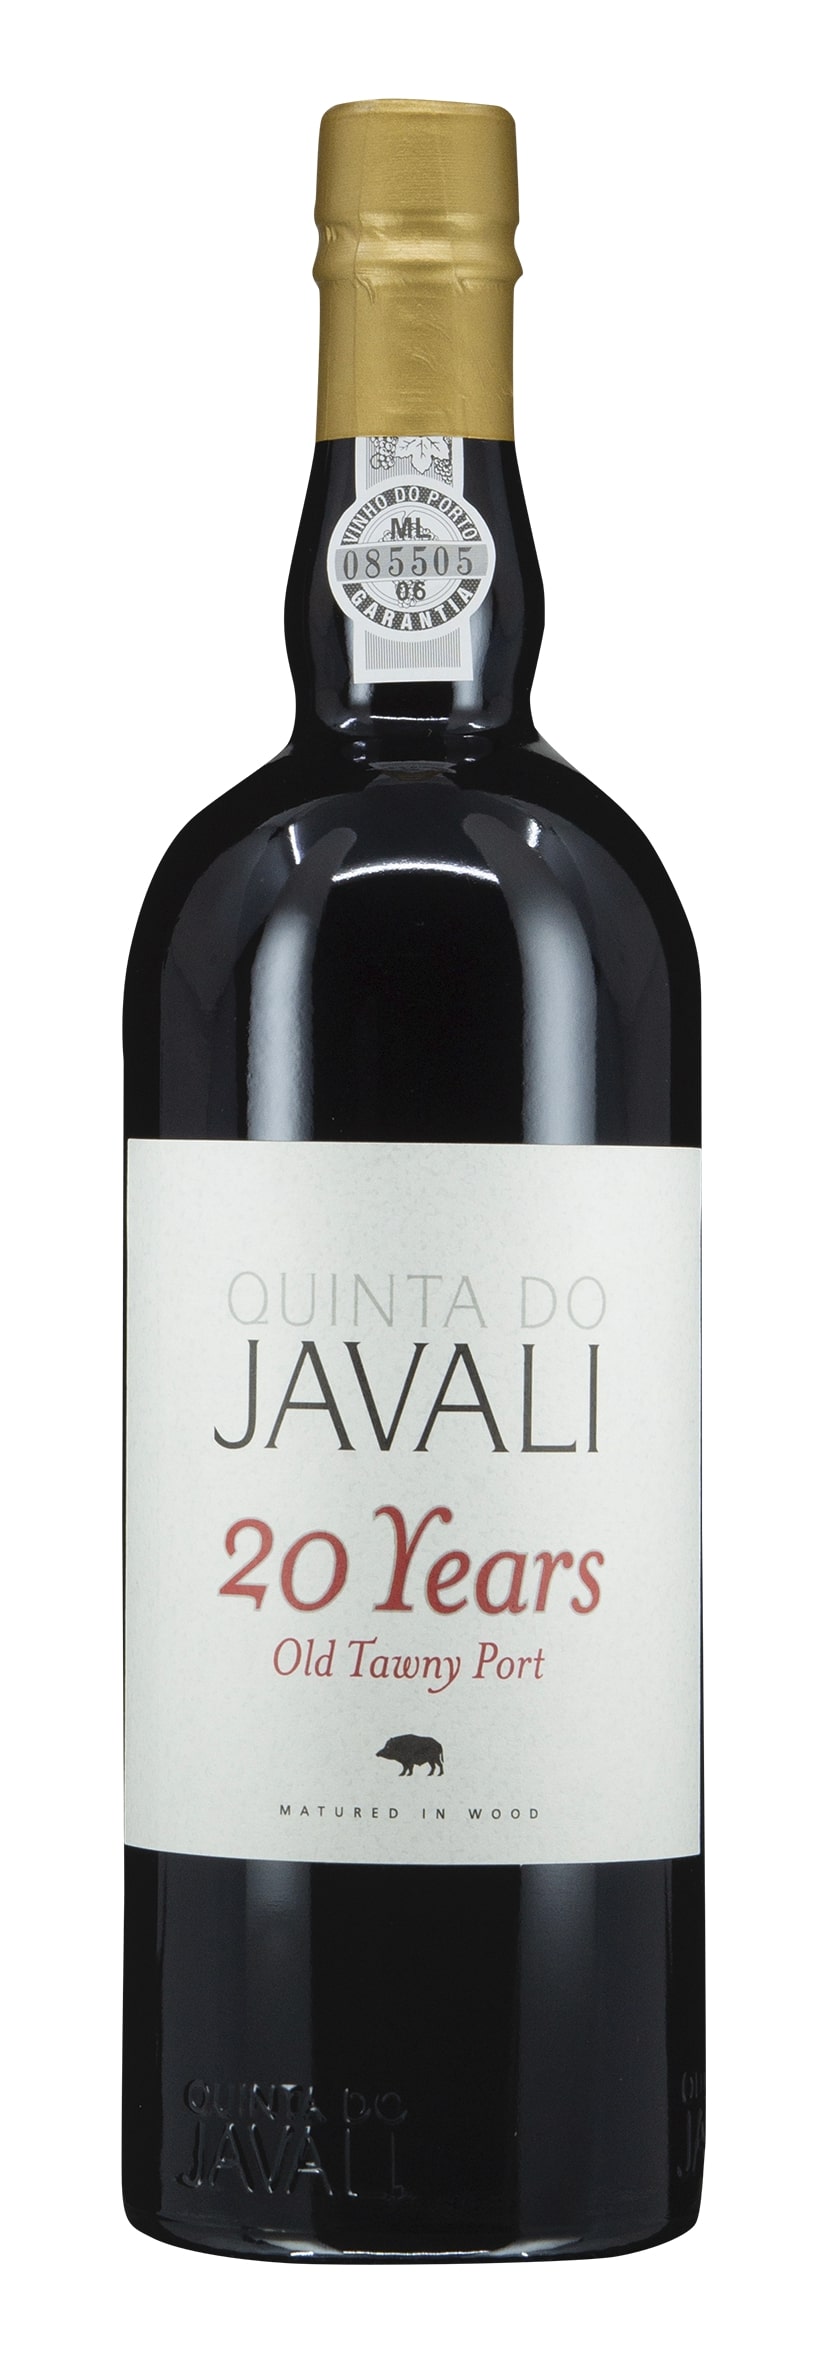 Quinta do Javali 20 Years Old Tawny Port 0